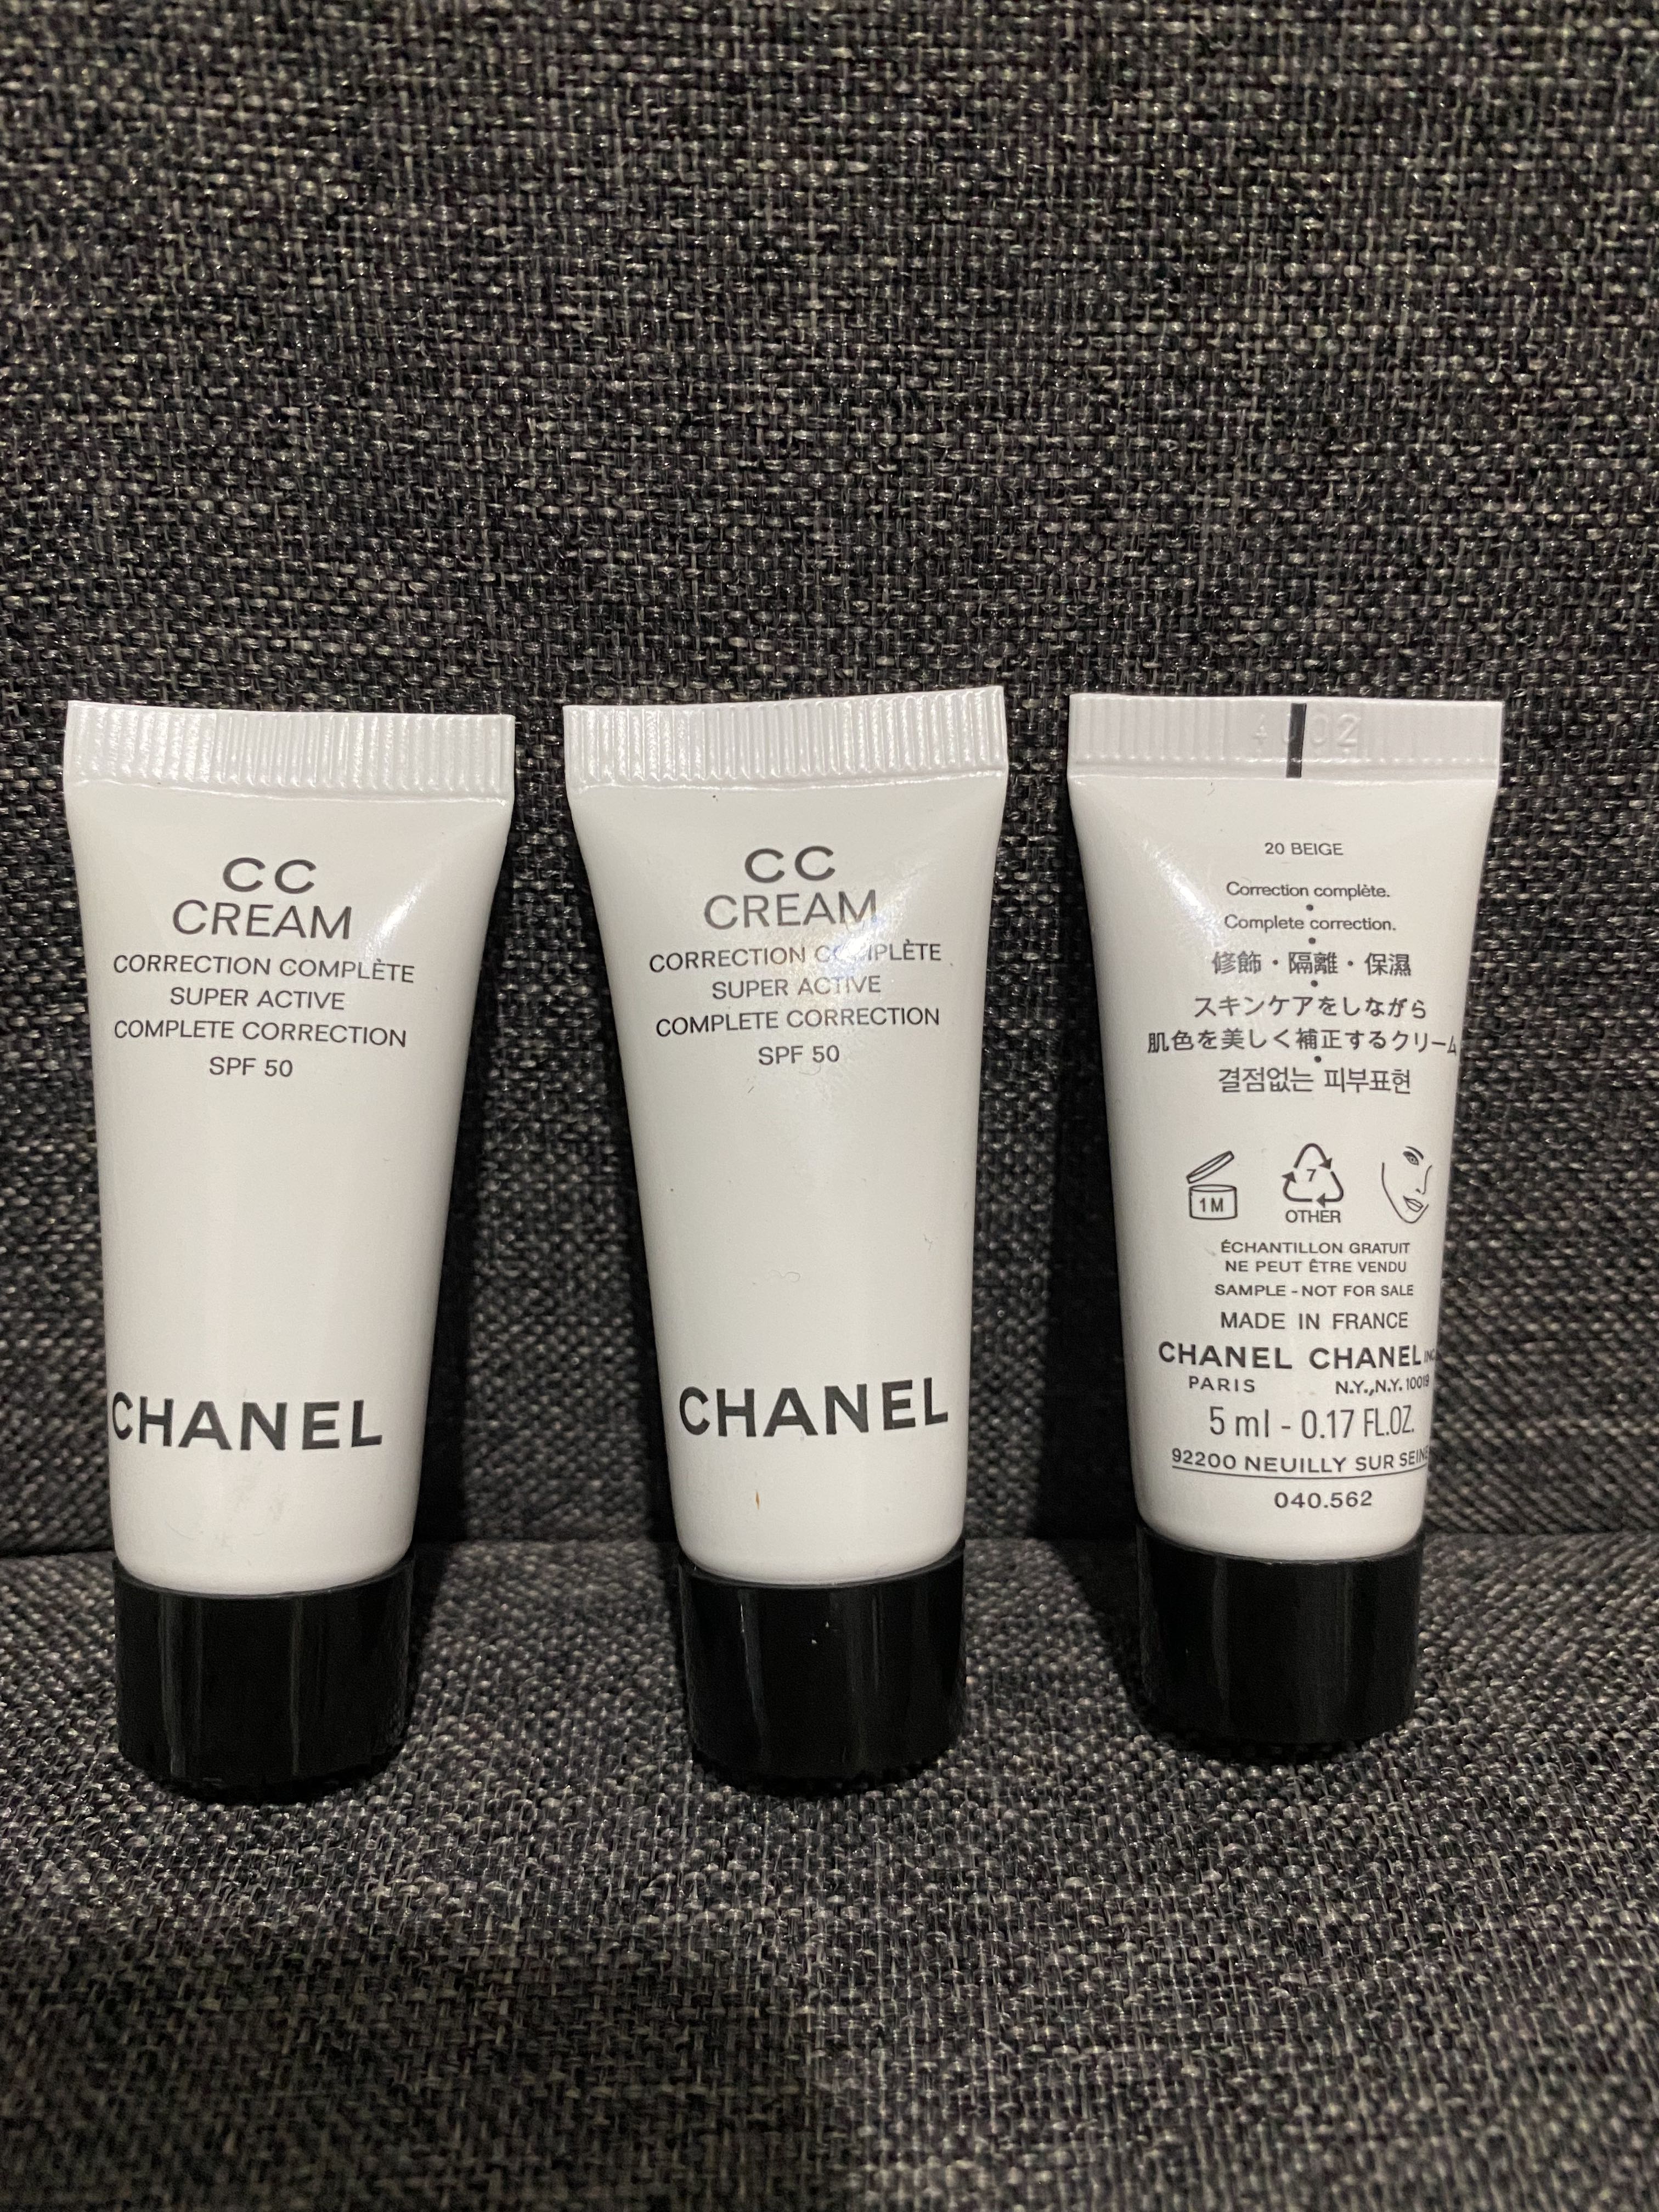 Chanel CC cream (20 Beige) 5ml per pcs